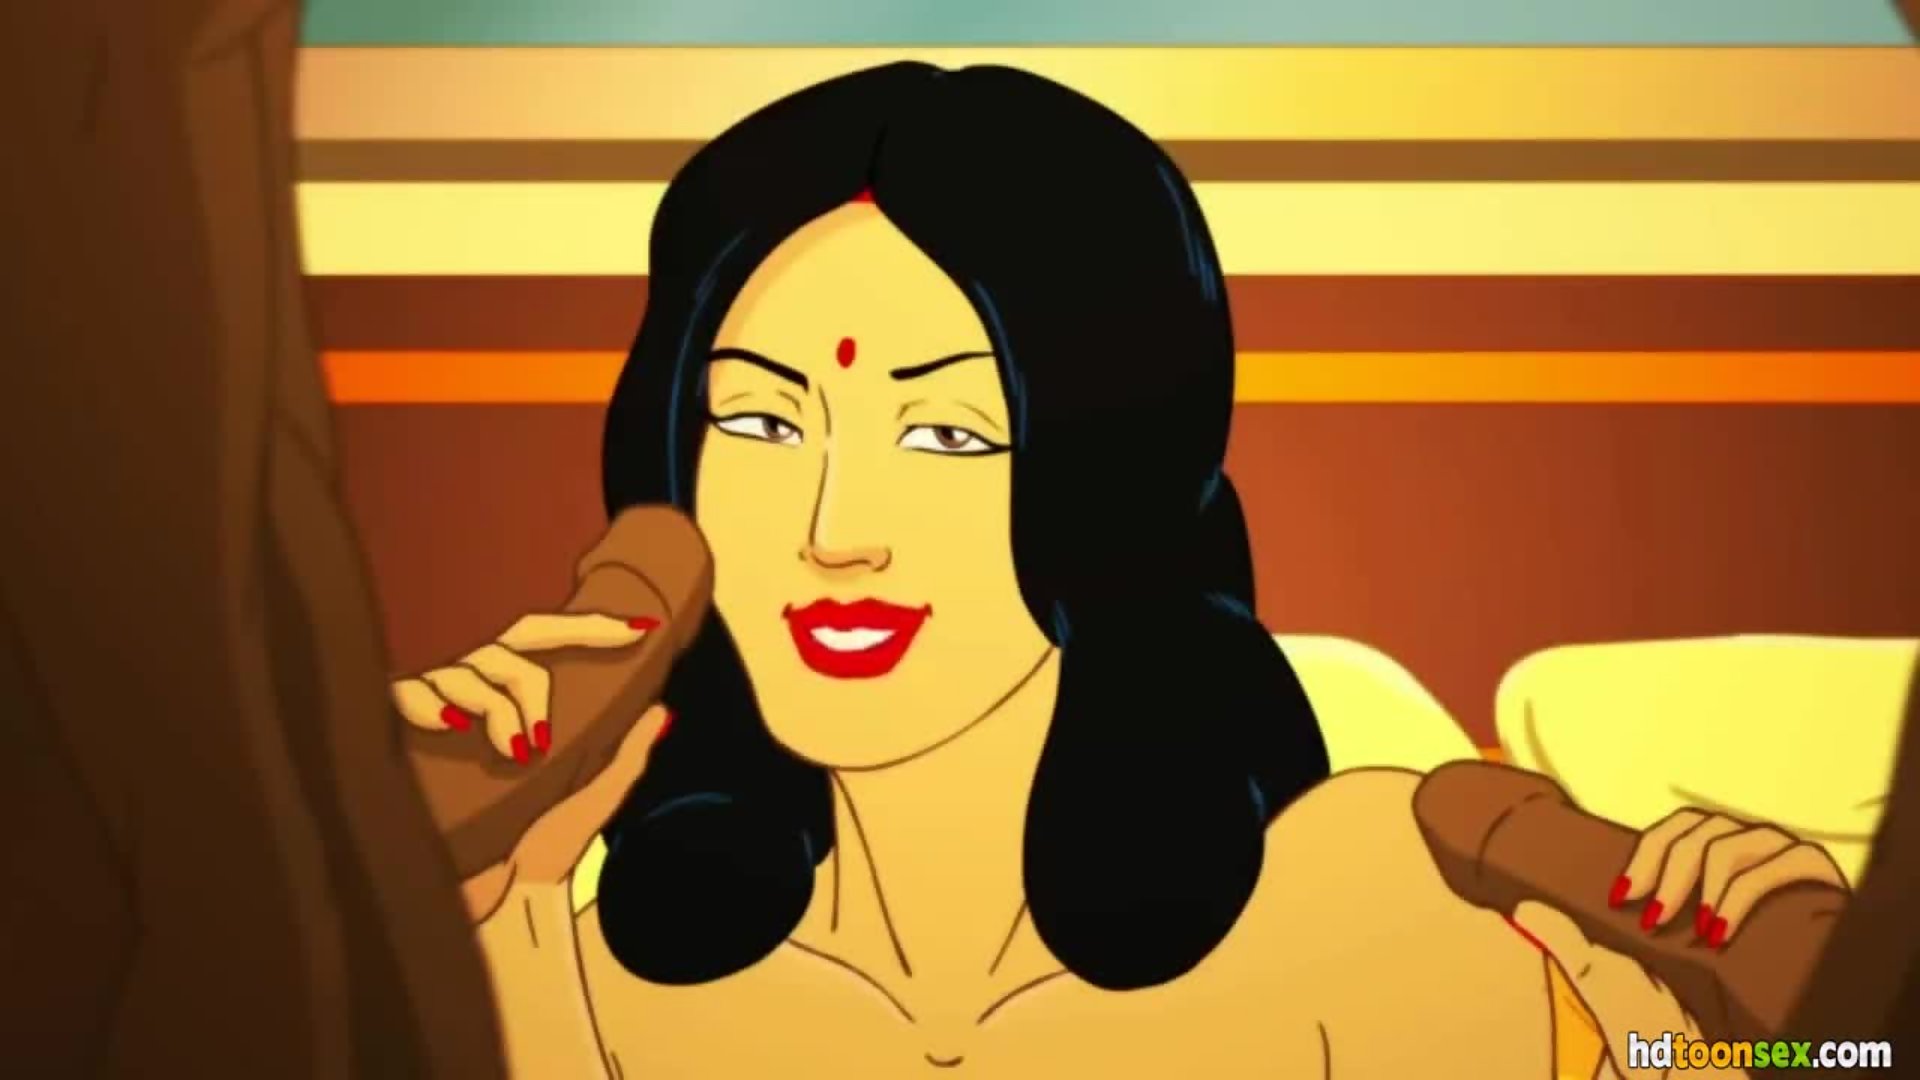 Native American Cartoon Porn - Savita Bhabhi - Busty mature cartoon indian woman sucks the dick of two  young guys - Hentai City